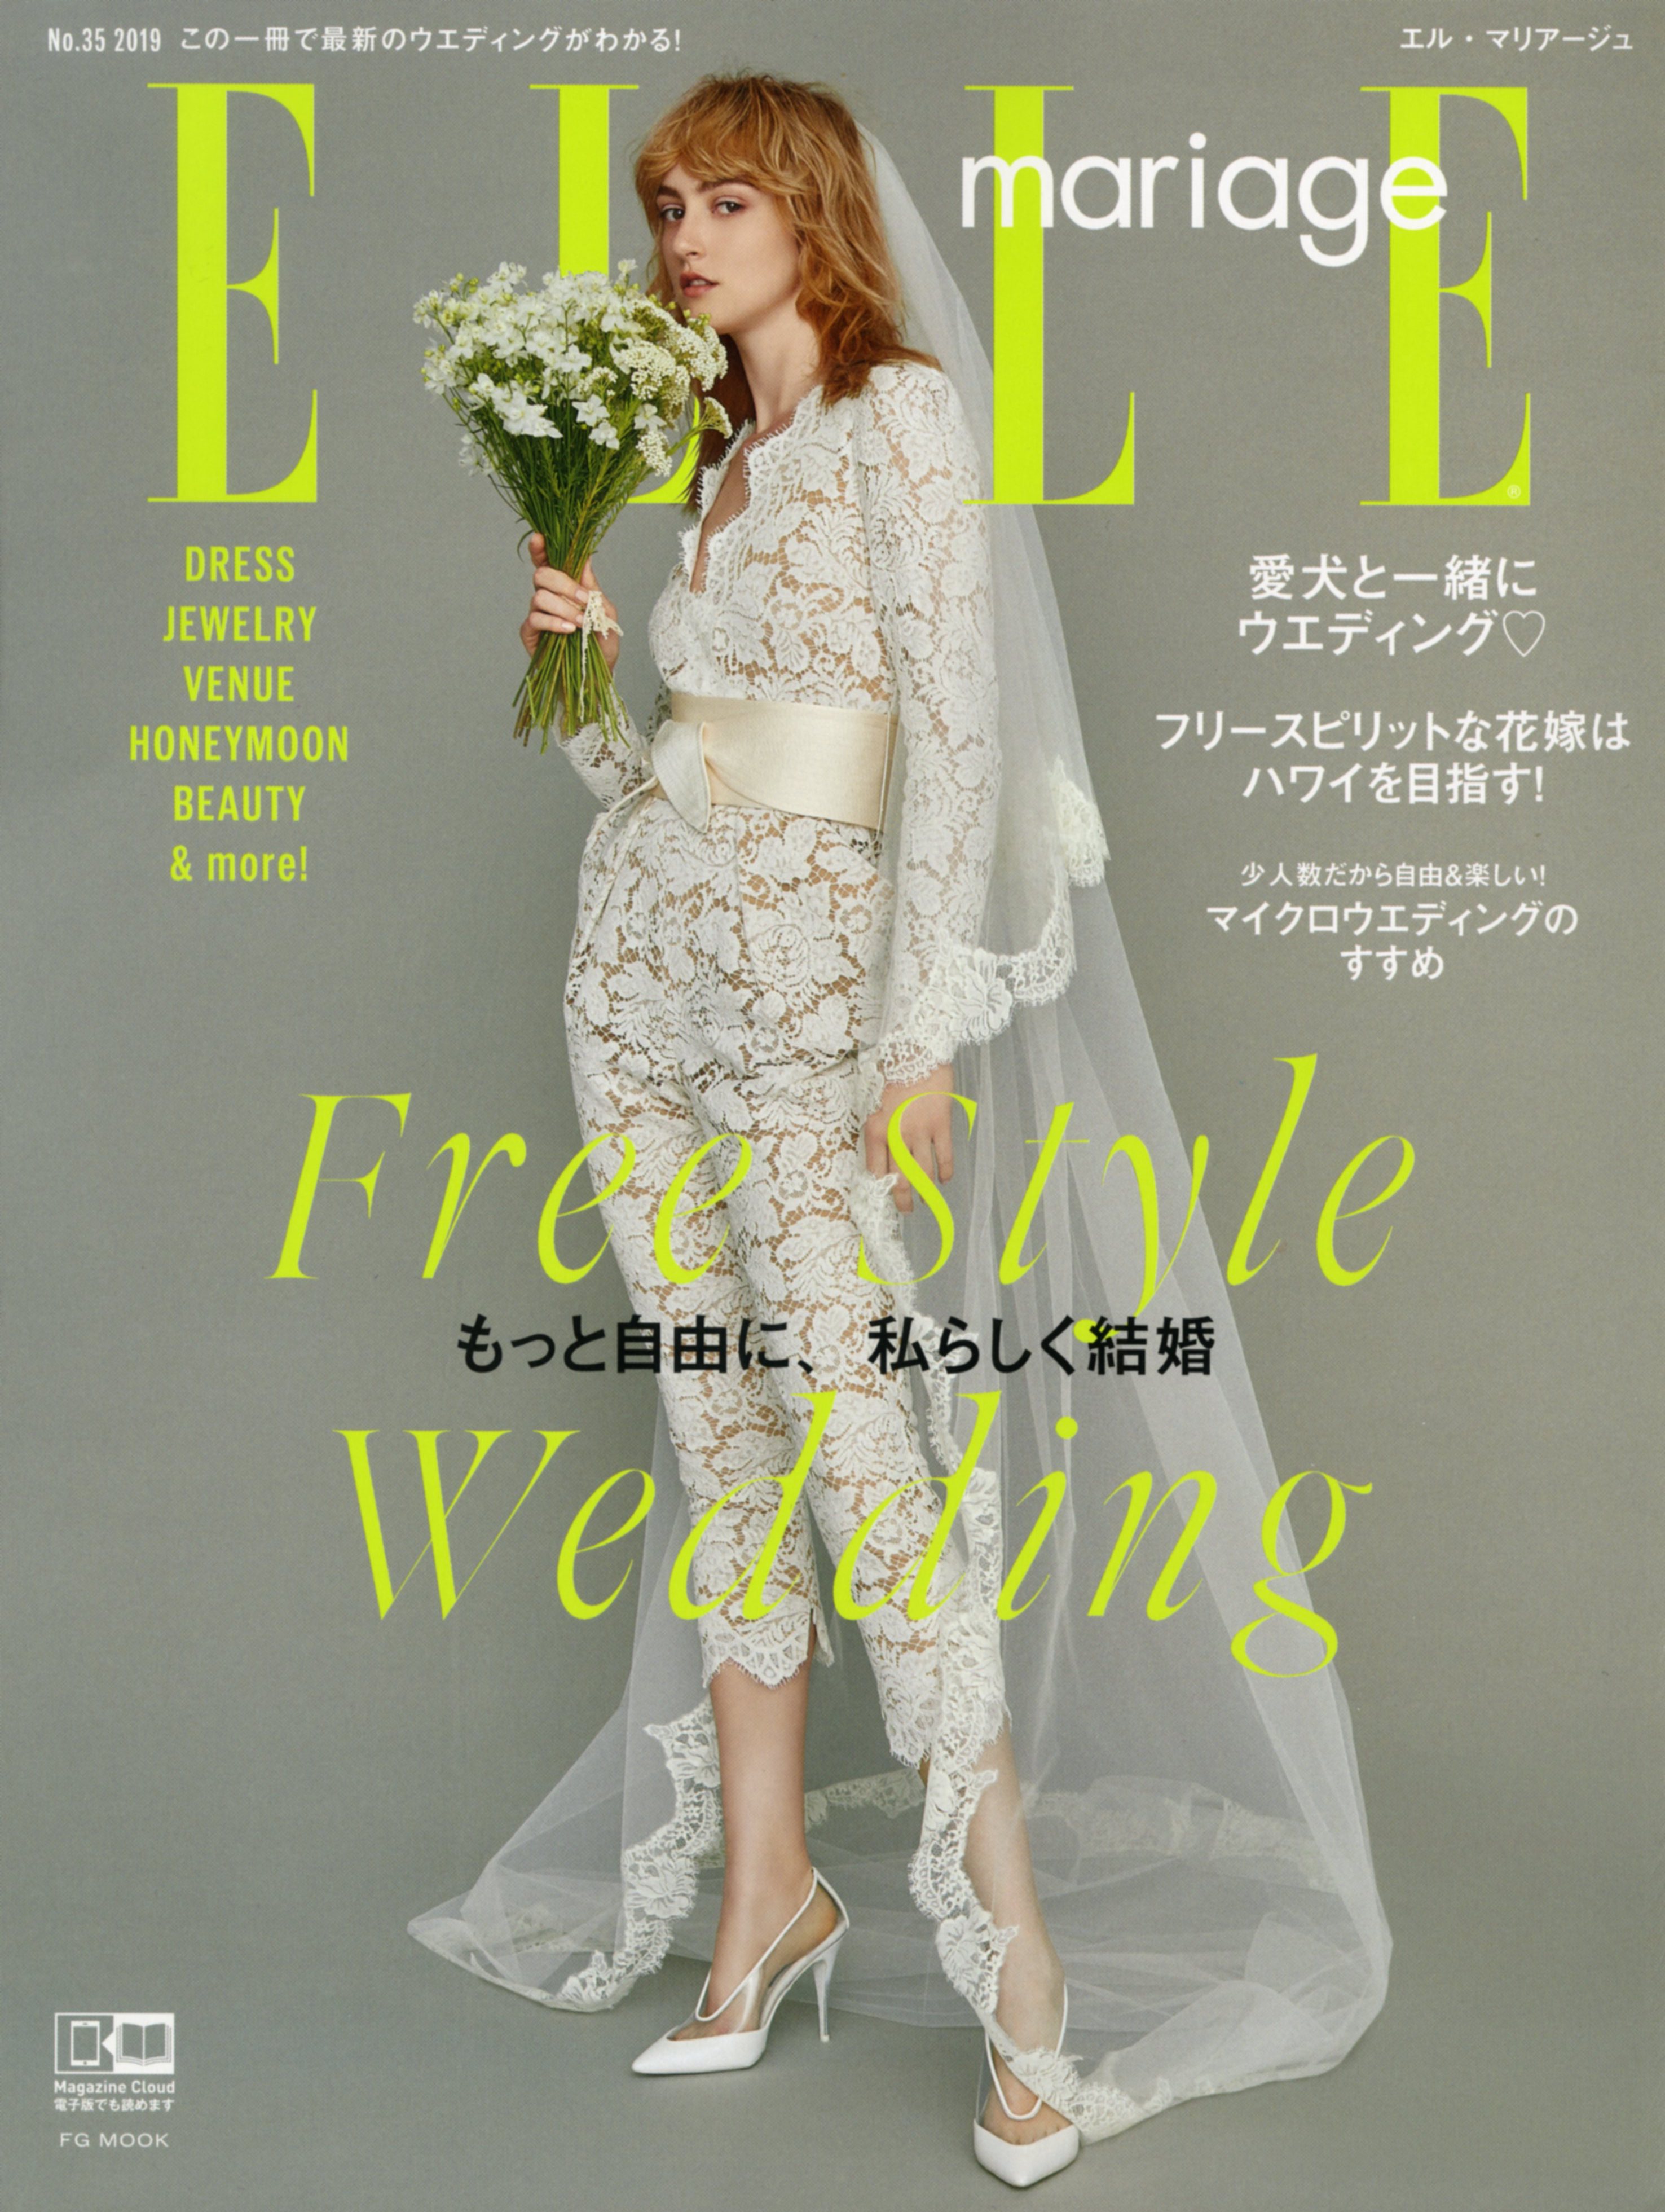 6月22日発売_ELLE mariage NO.35 2019　表紙